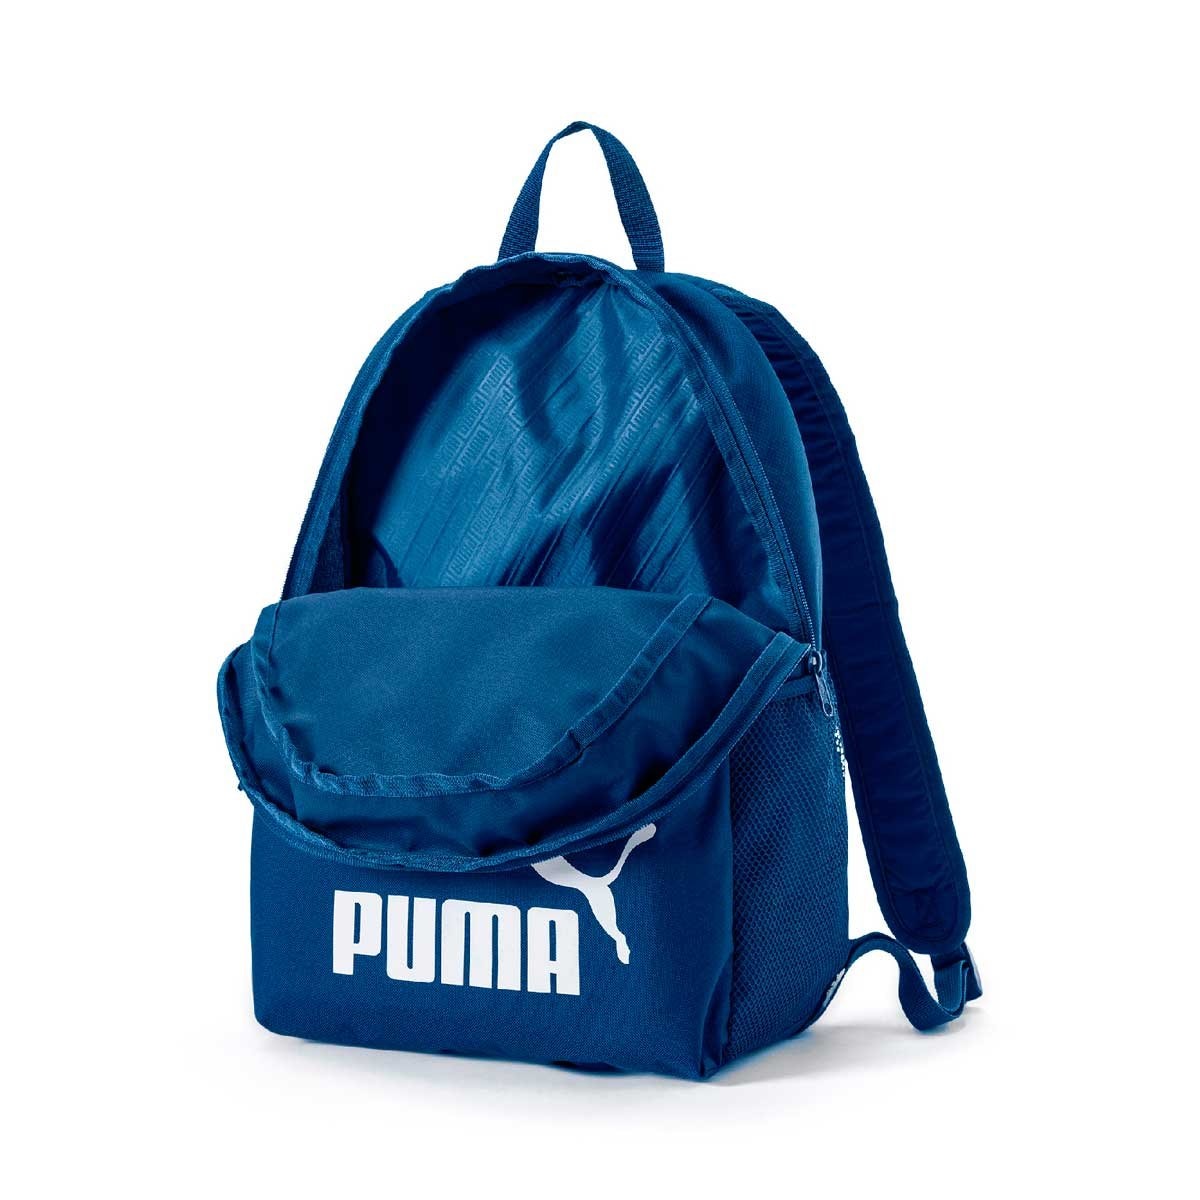 phase backpack